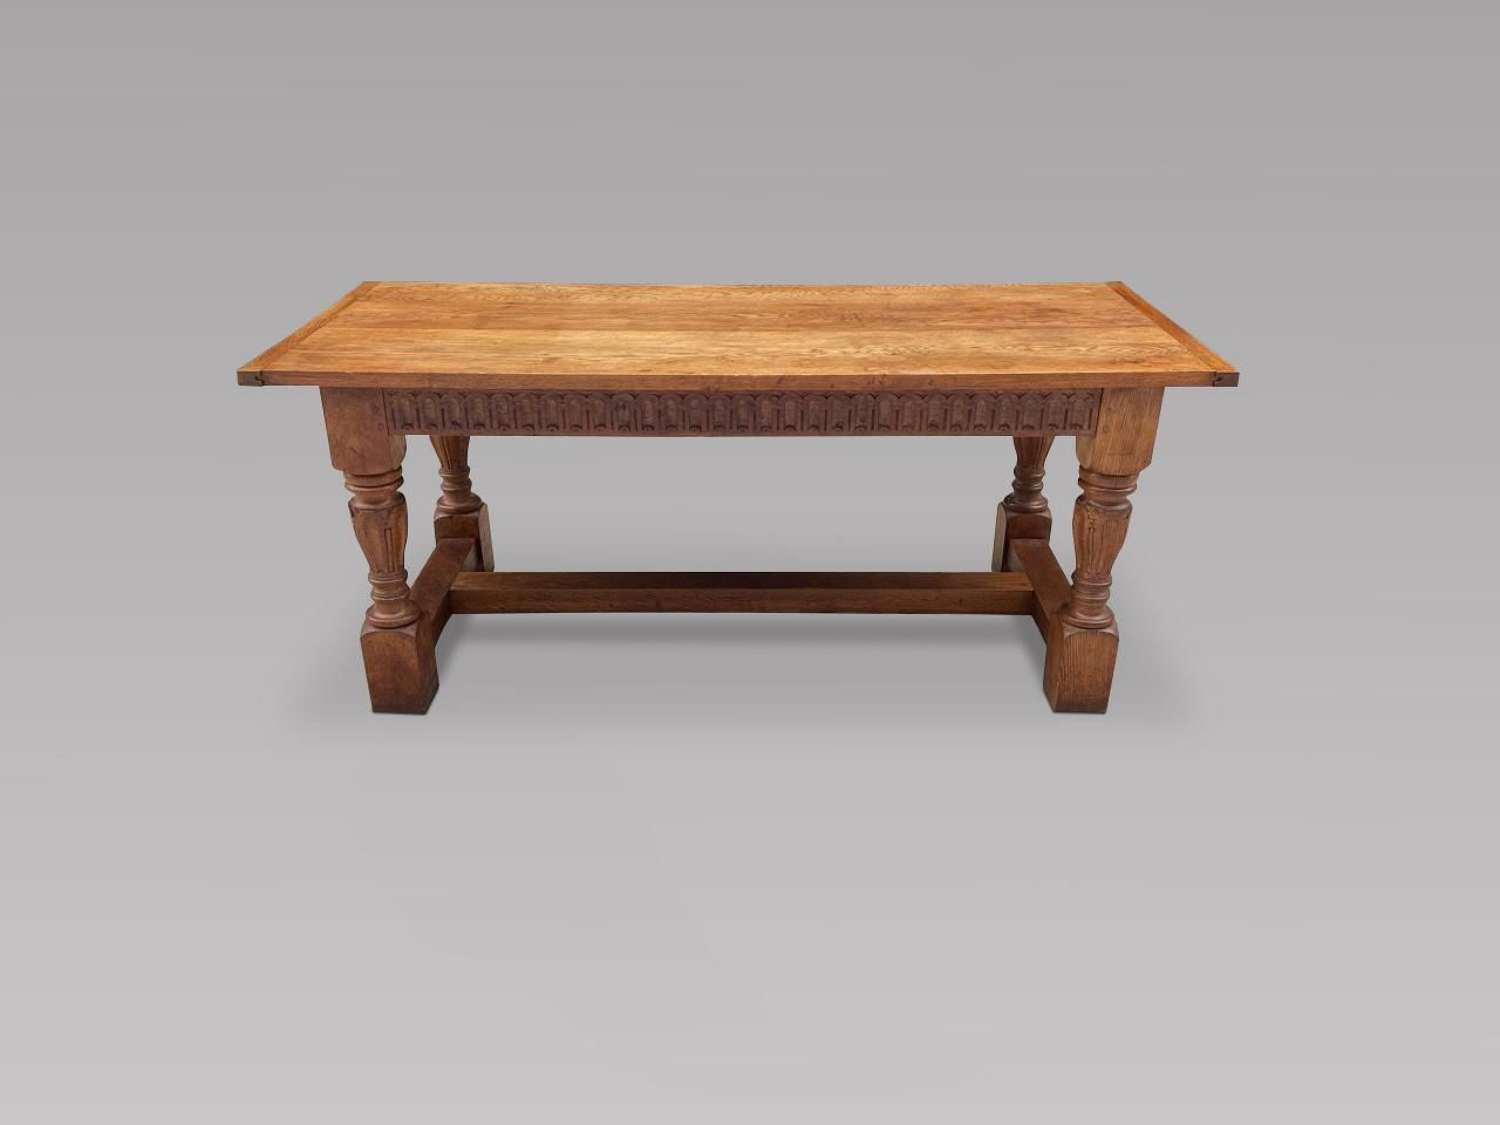 19th Century Oak Refectory Table